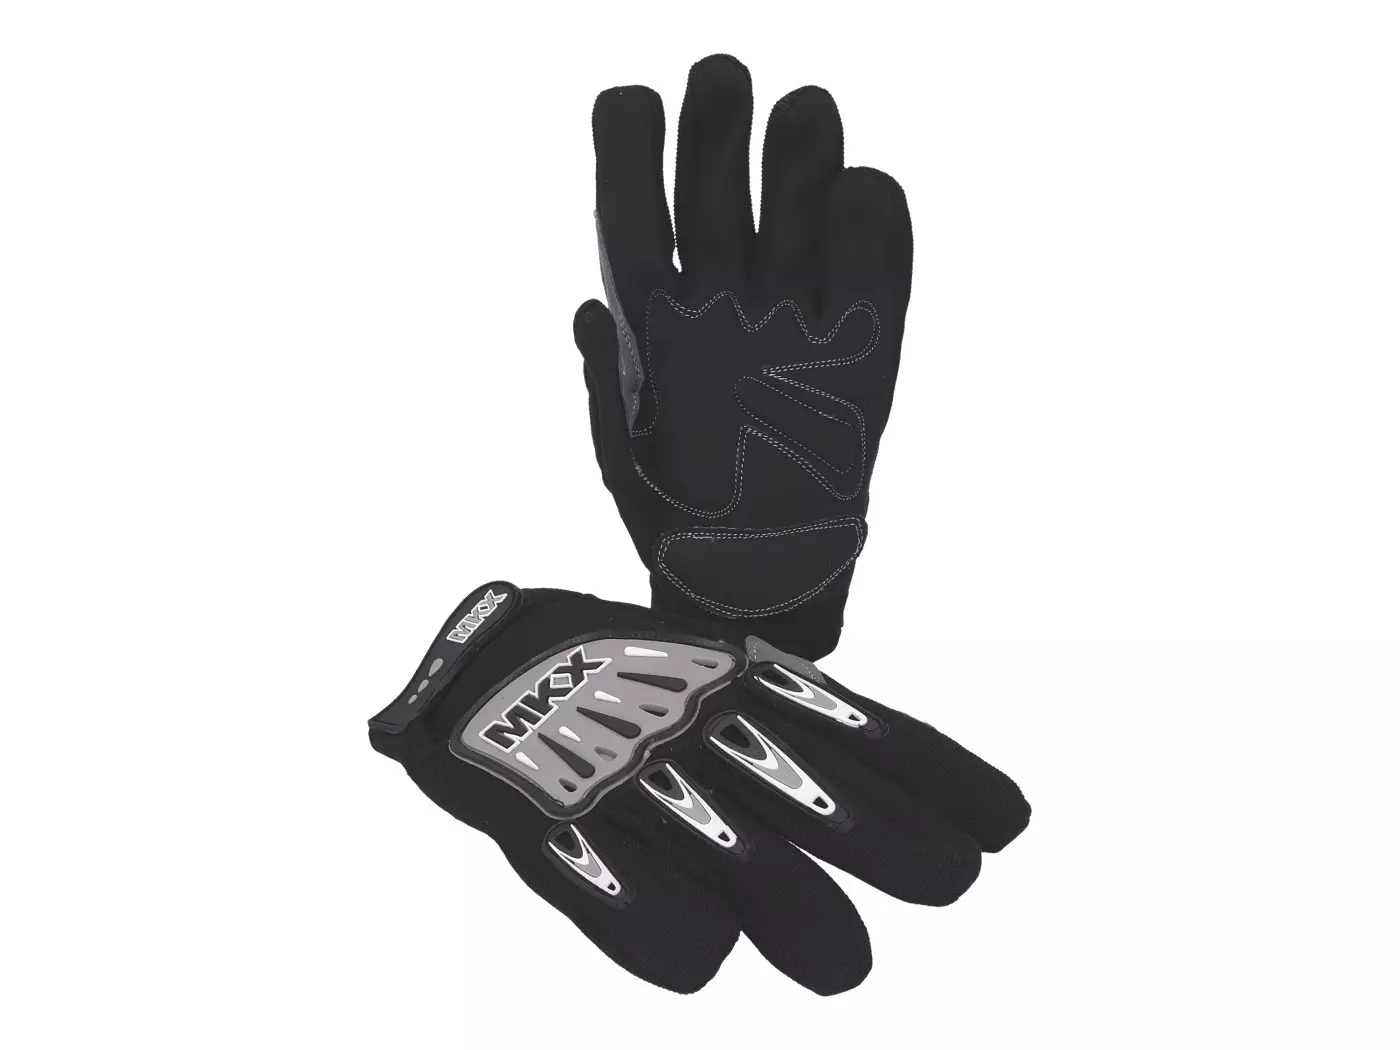 Gloves MKX Cross Black - Size M